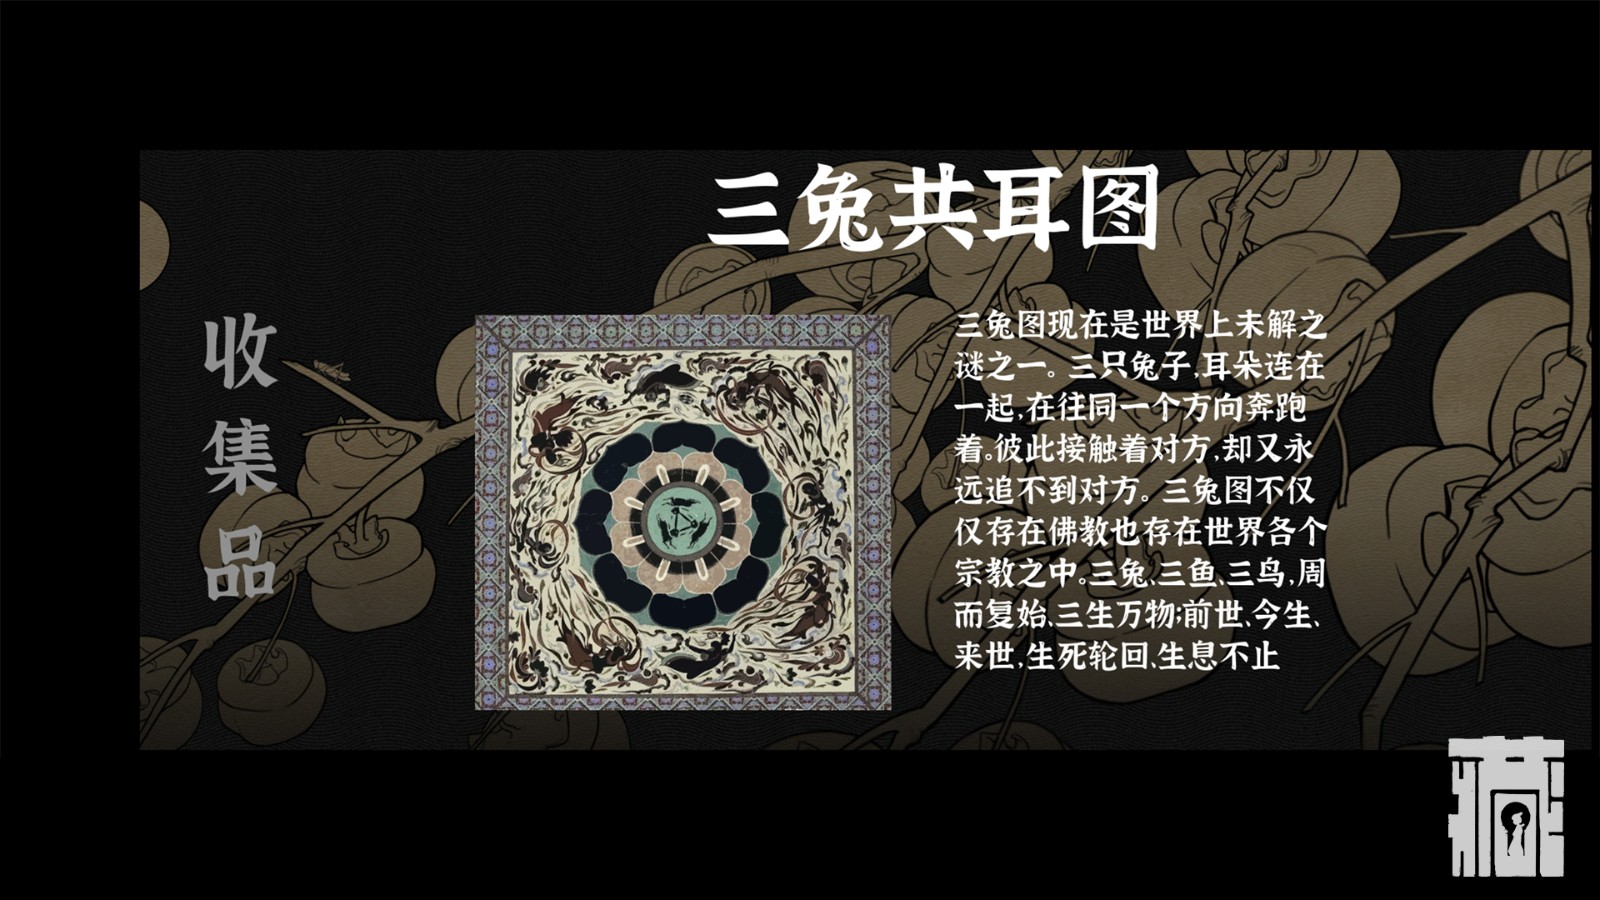 B站游戏大赏：历史文化题材3D冒险解谜《藏梦》中文预告 支持简体中文